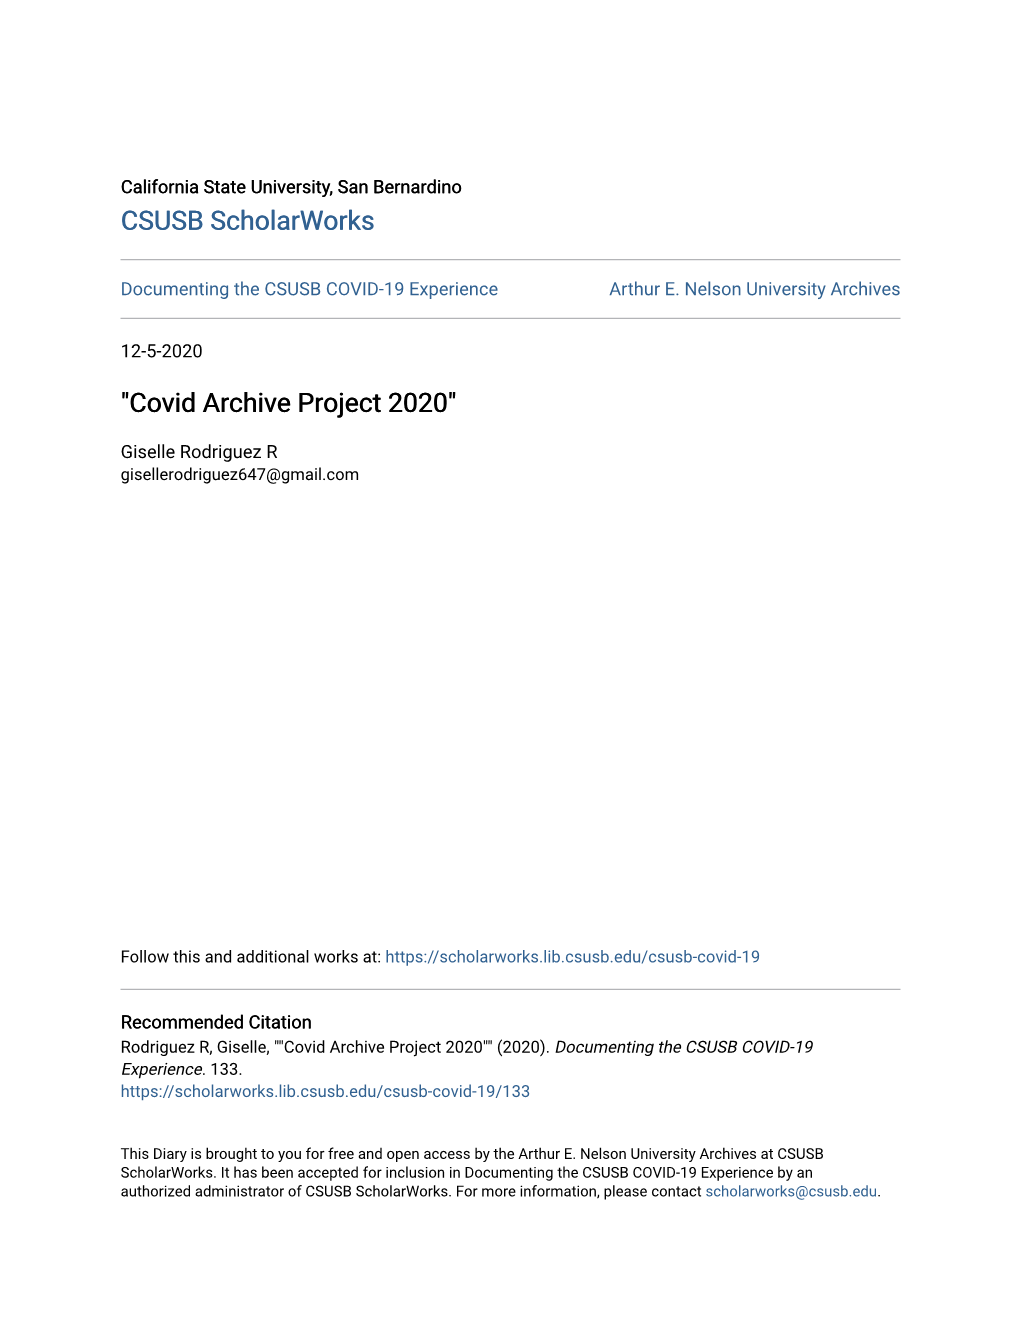 "Covid Archive Project 2020"